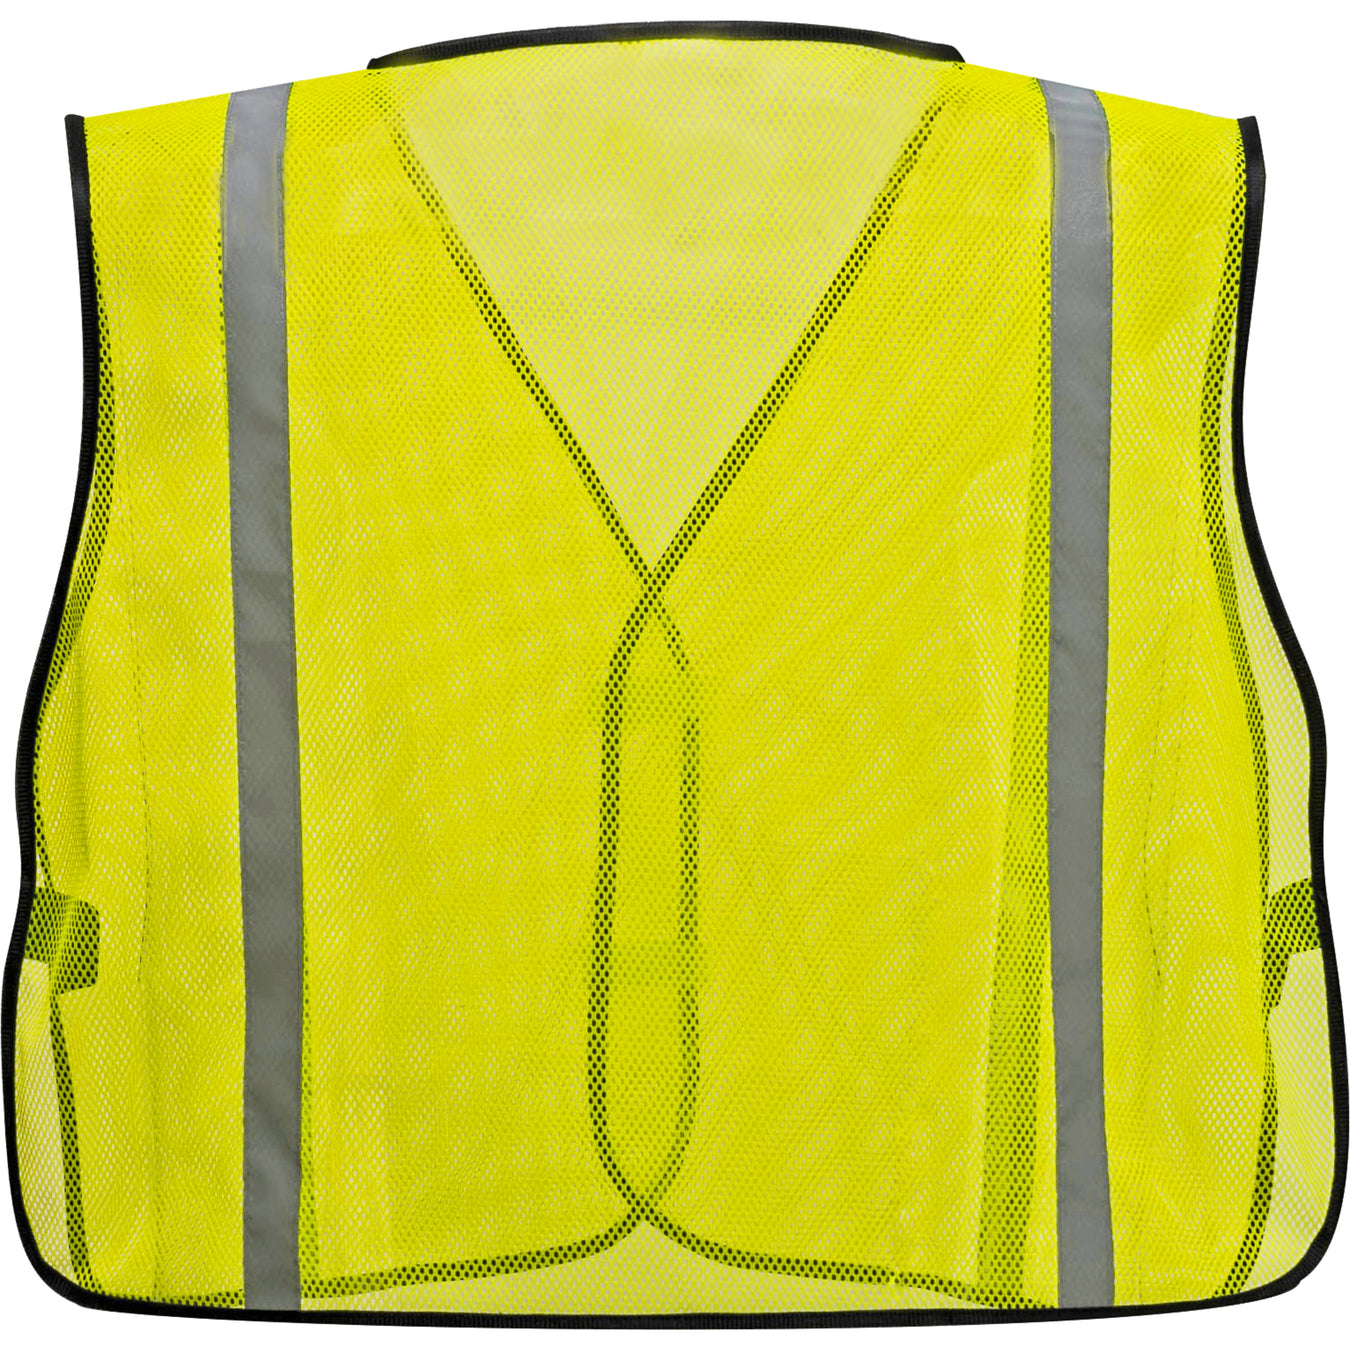 Lightweight Mesh Safety Vests